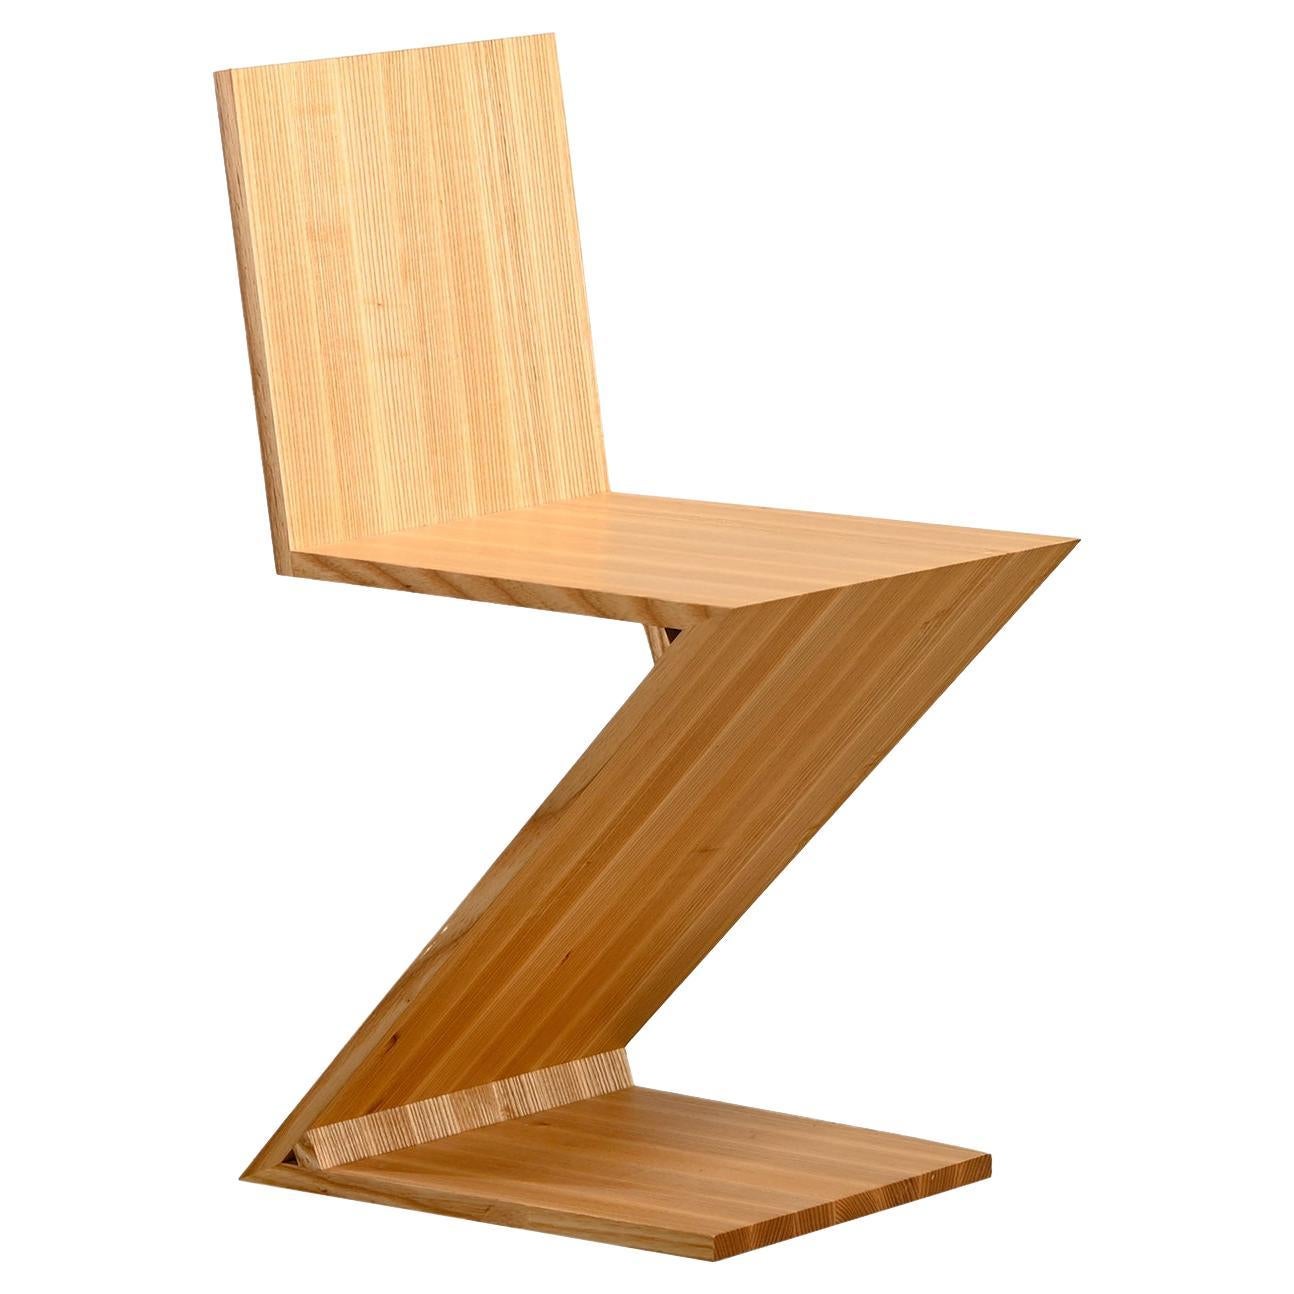 Gerrit Rietveld Zig Zag Chair is Ash wood